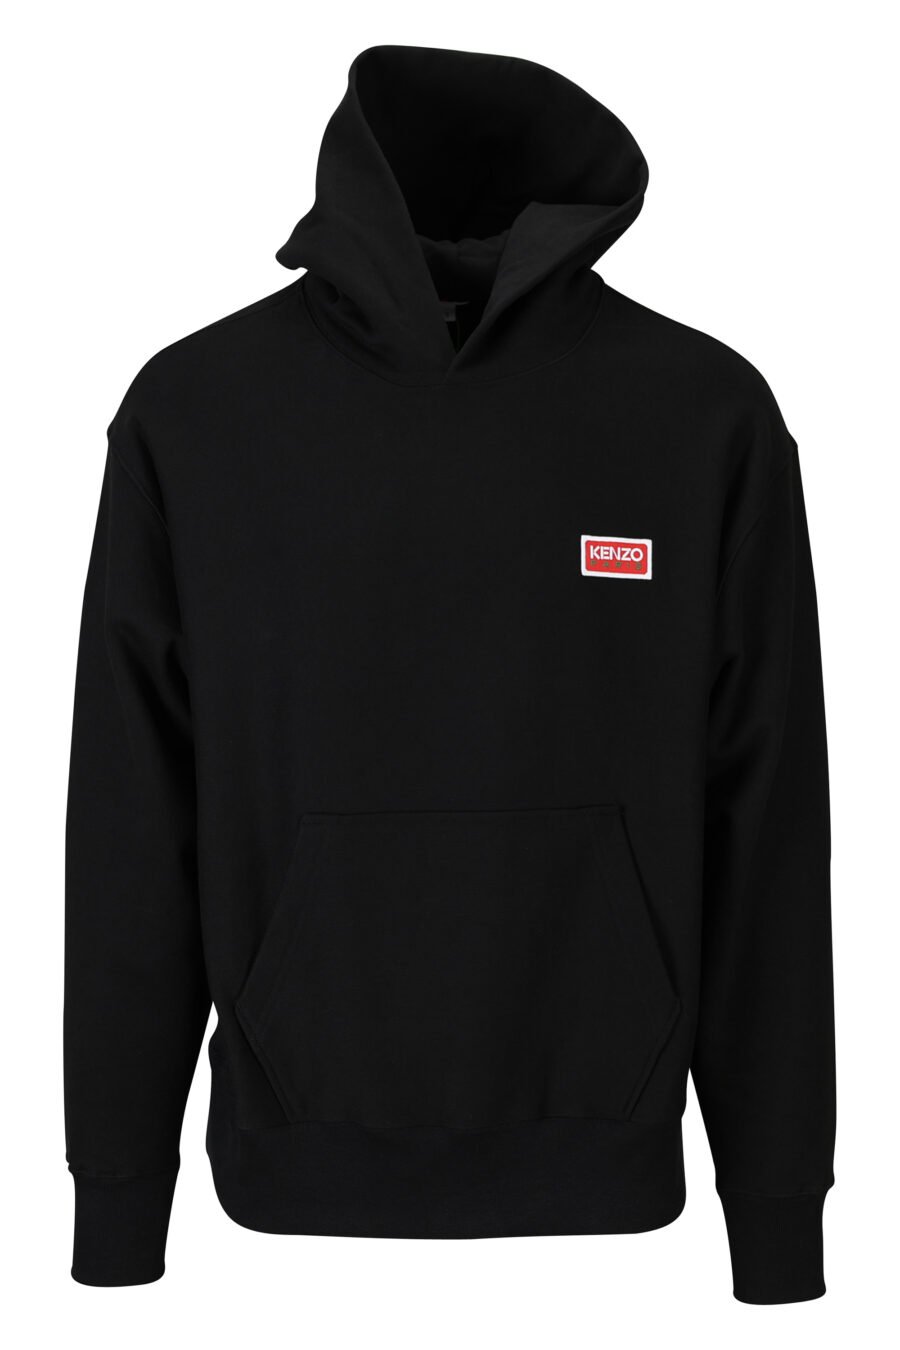 Black sweatshirt with hood and maxilogo "Kenzo Paris" on the back - 3612230537422